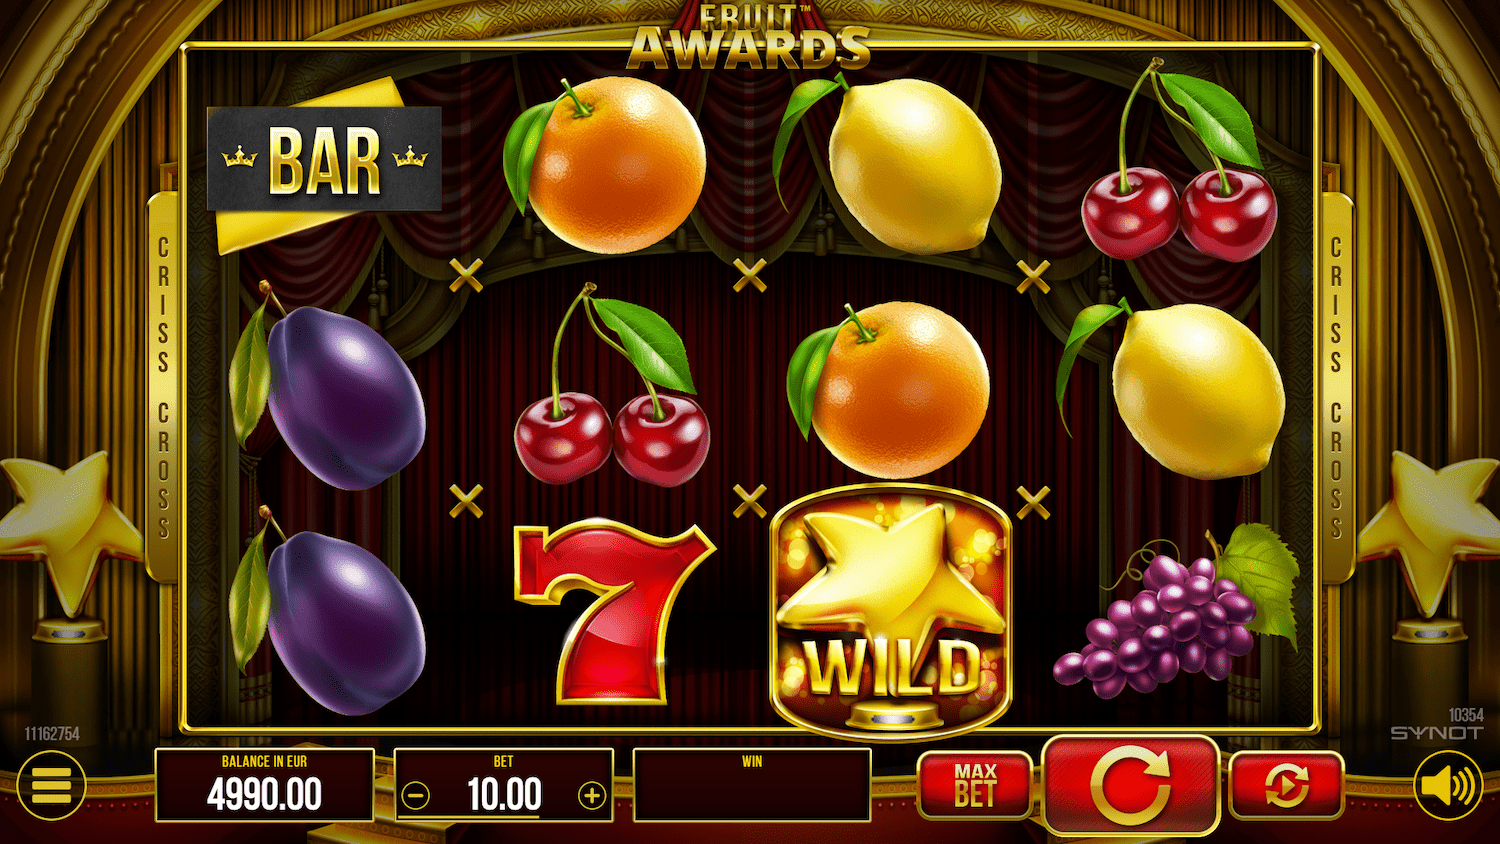 Slot Fruit Awards oleh SYNOT Games - pratinjau gulungan